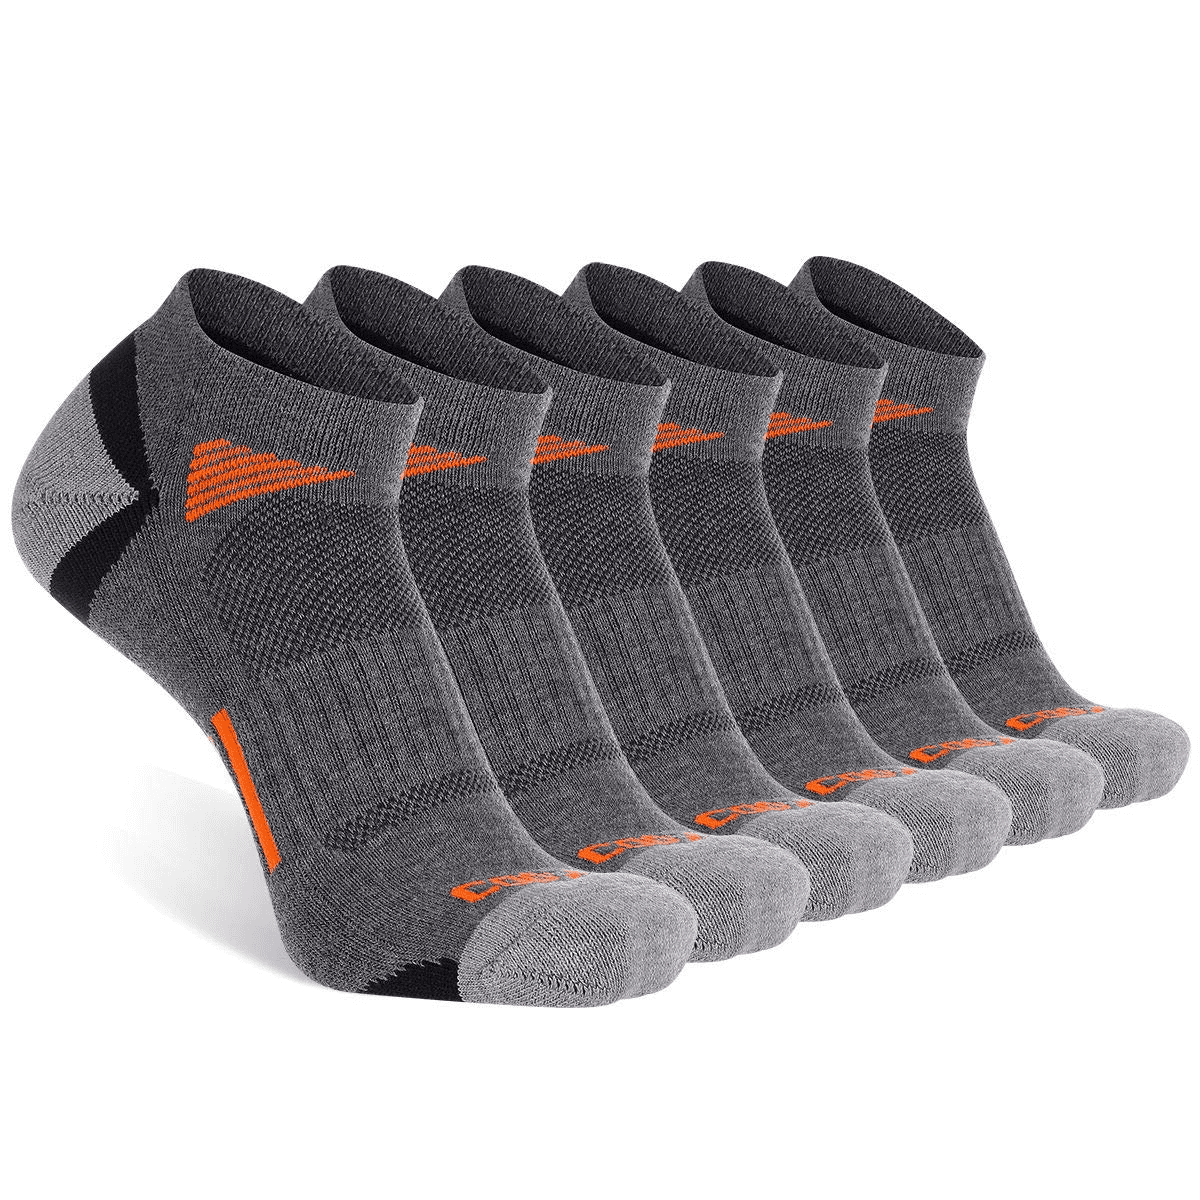 COOPLUS Mens Ankle Low Cut Socks Men's Athletic Breathable Socks 6 ...